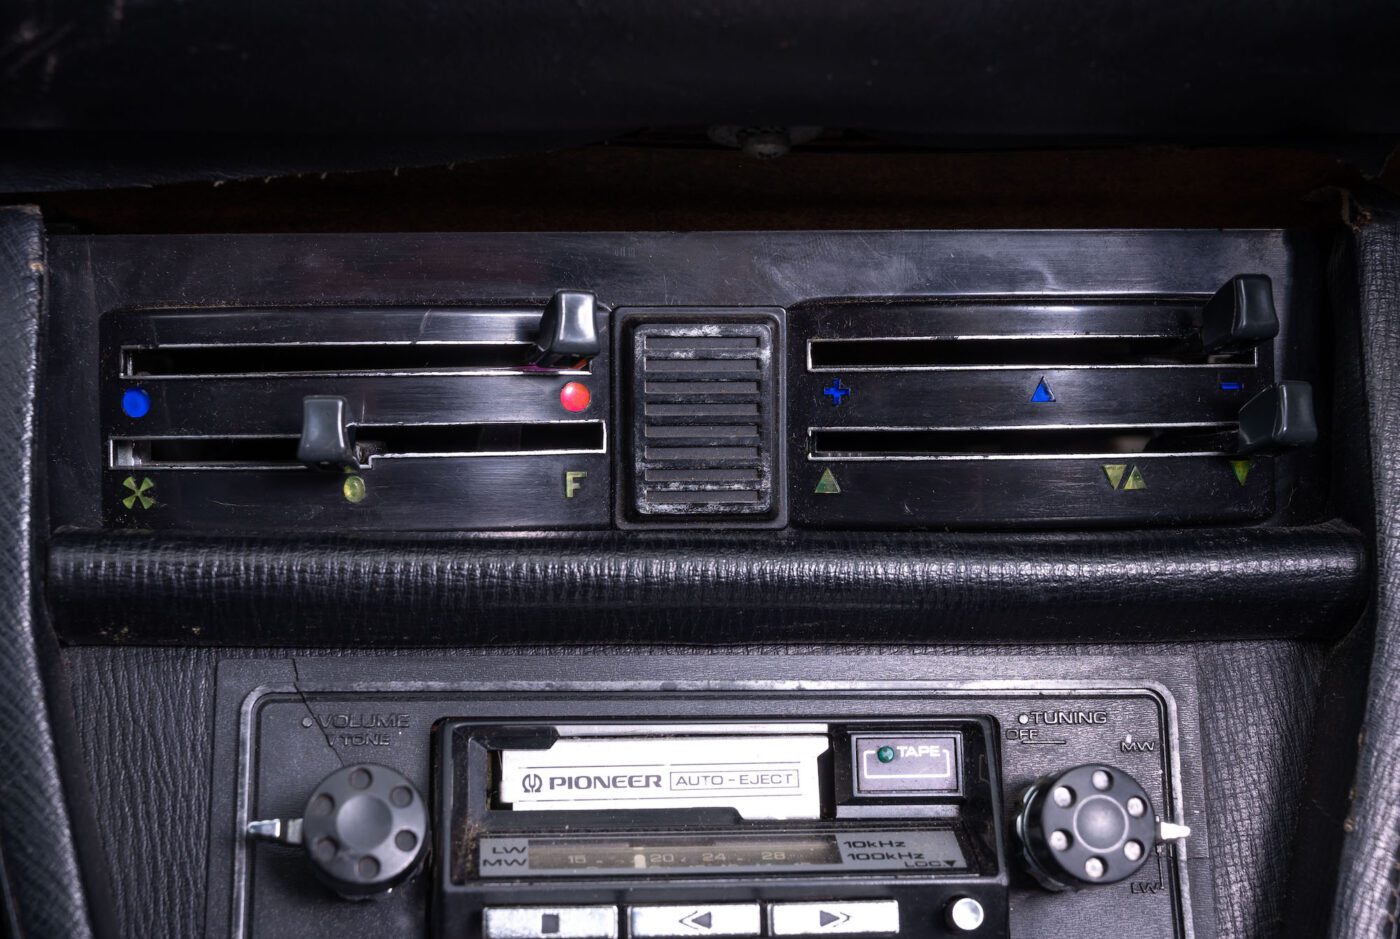 Peugeot 504 Cabriolet heater controls